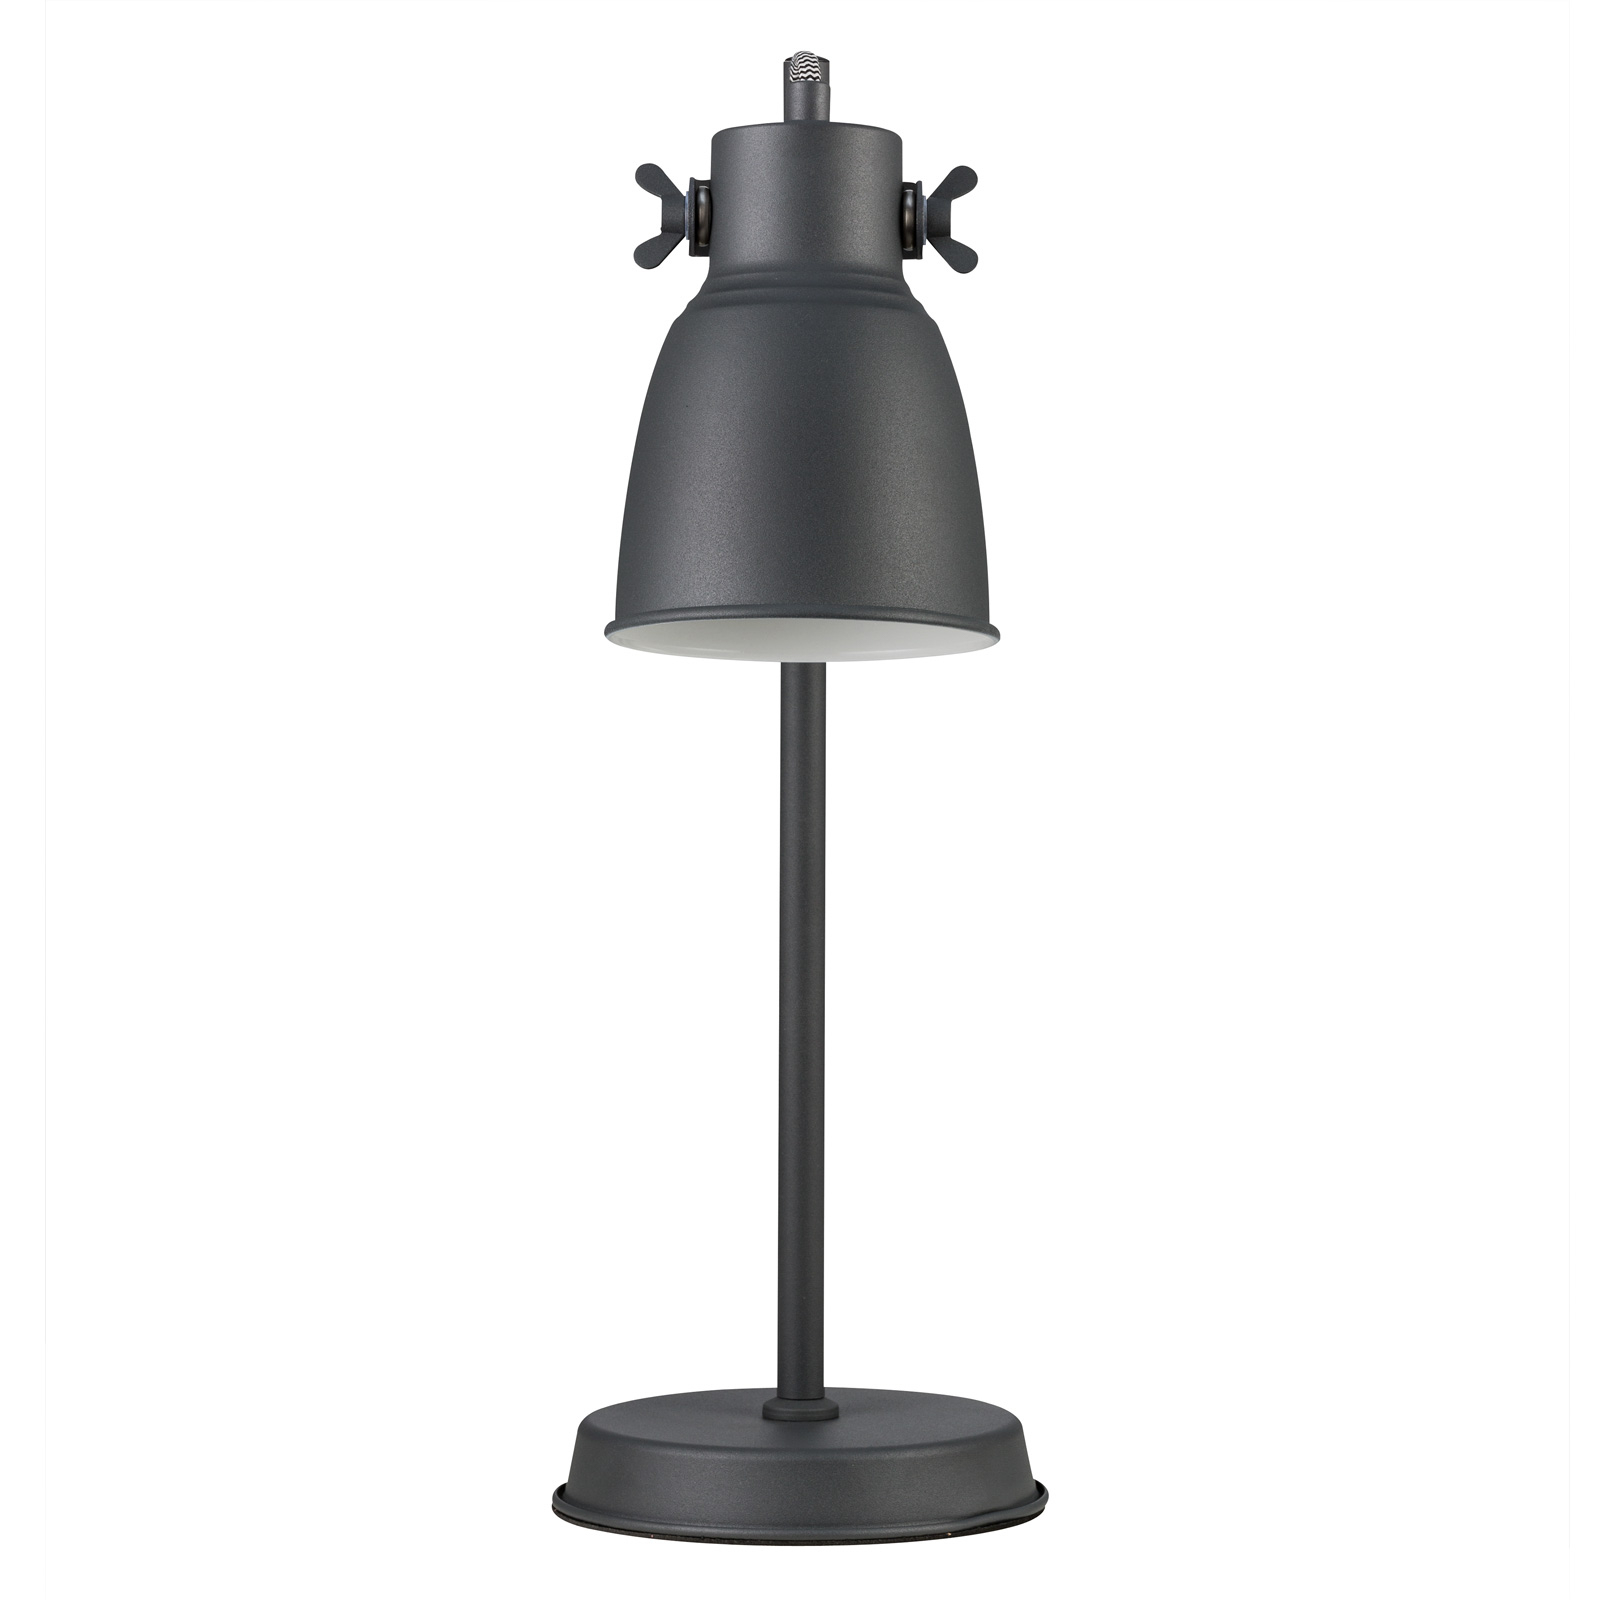 Adrian table lamp made of metal, black